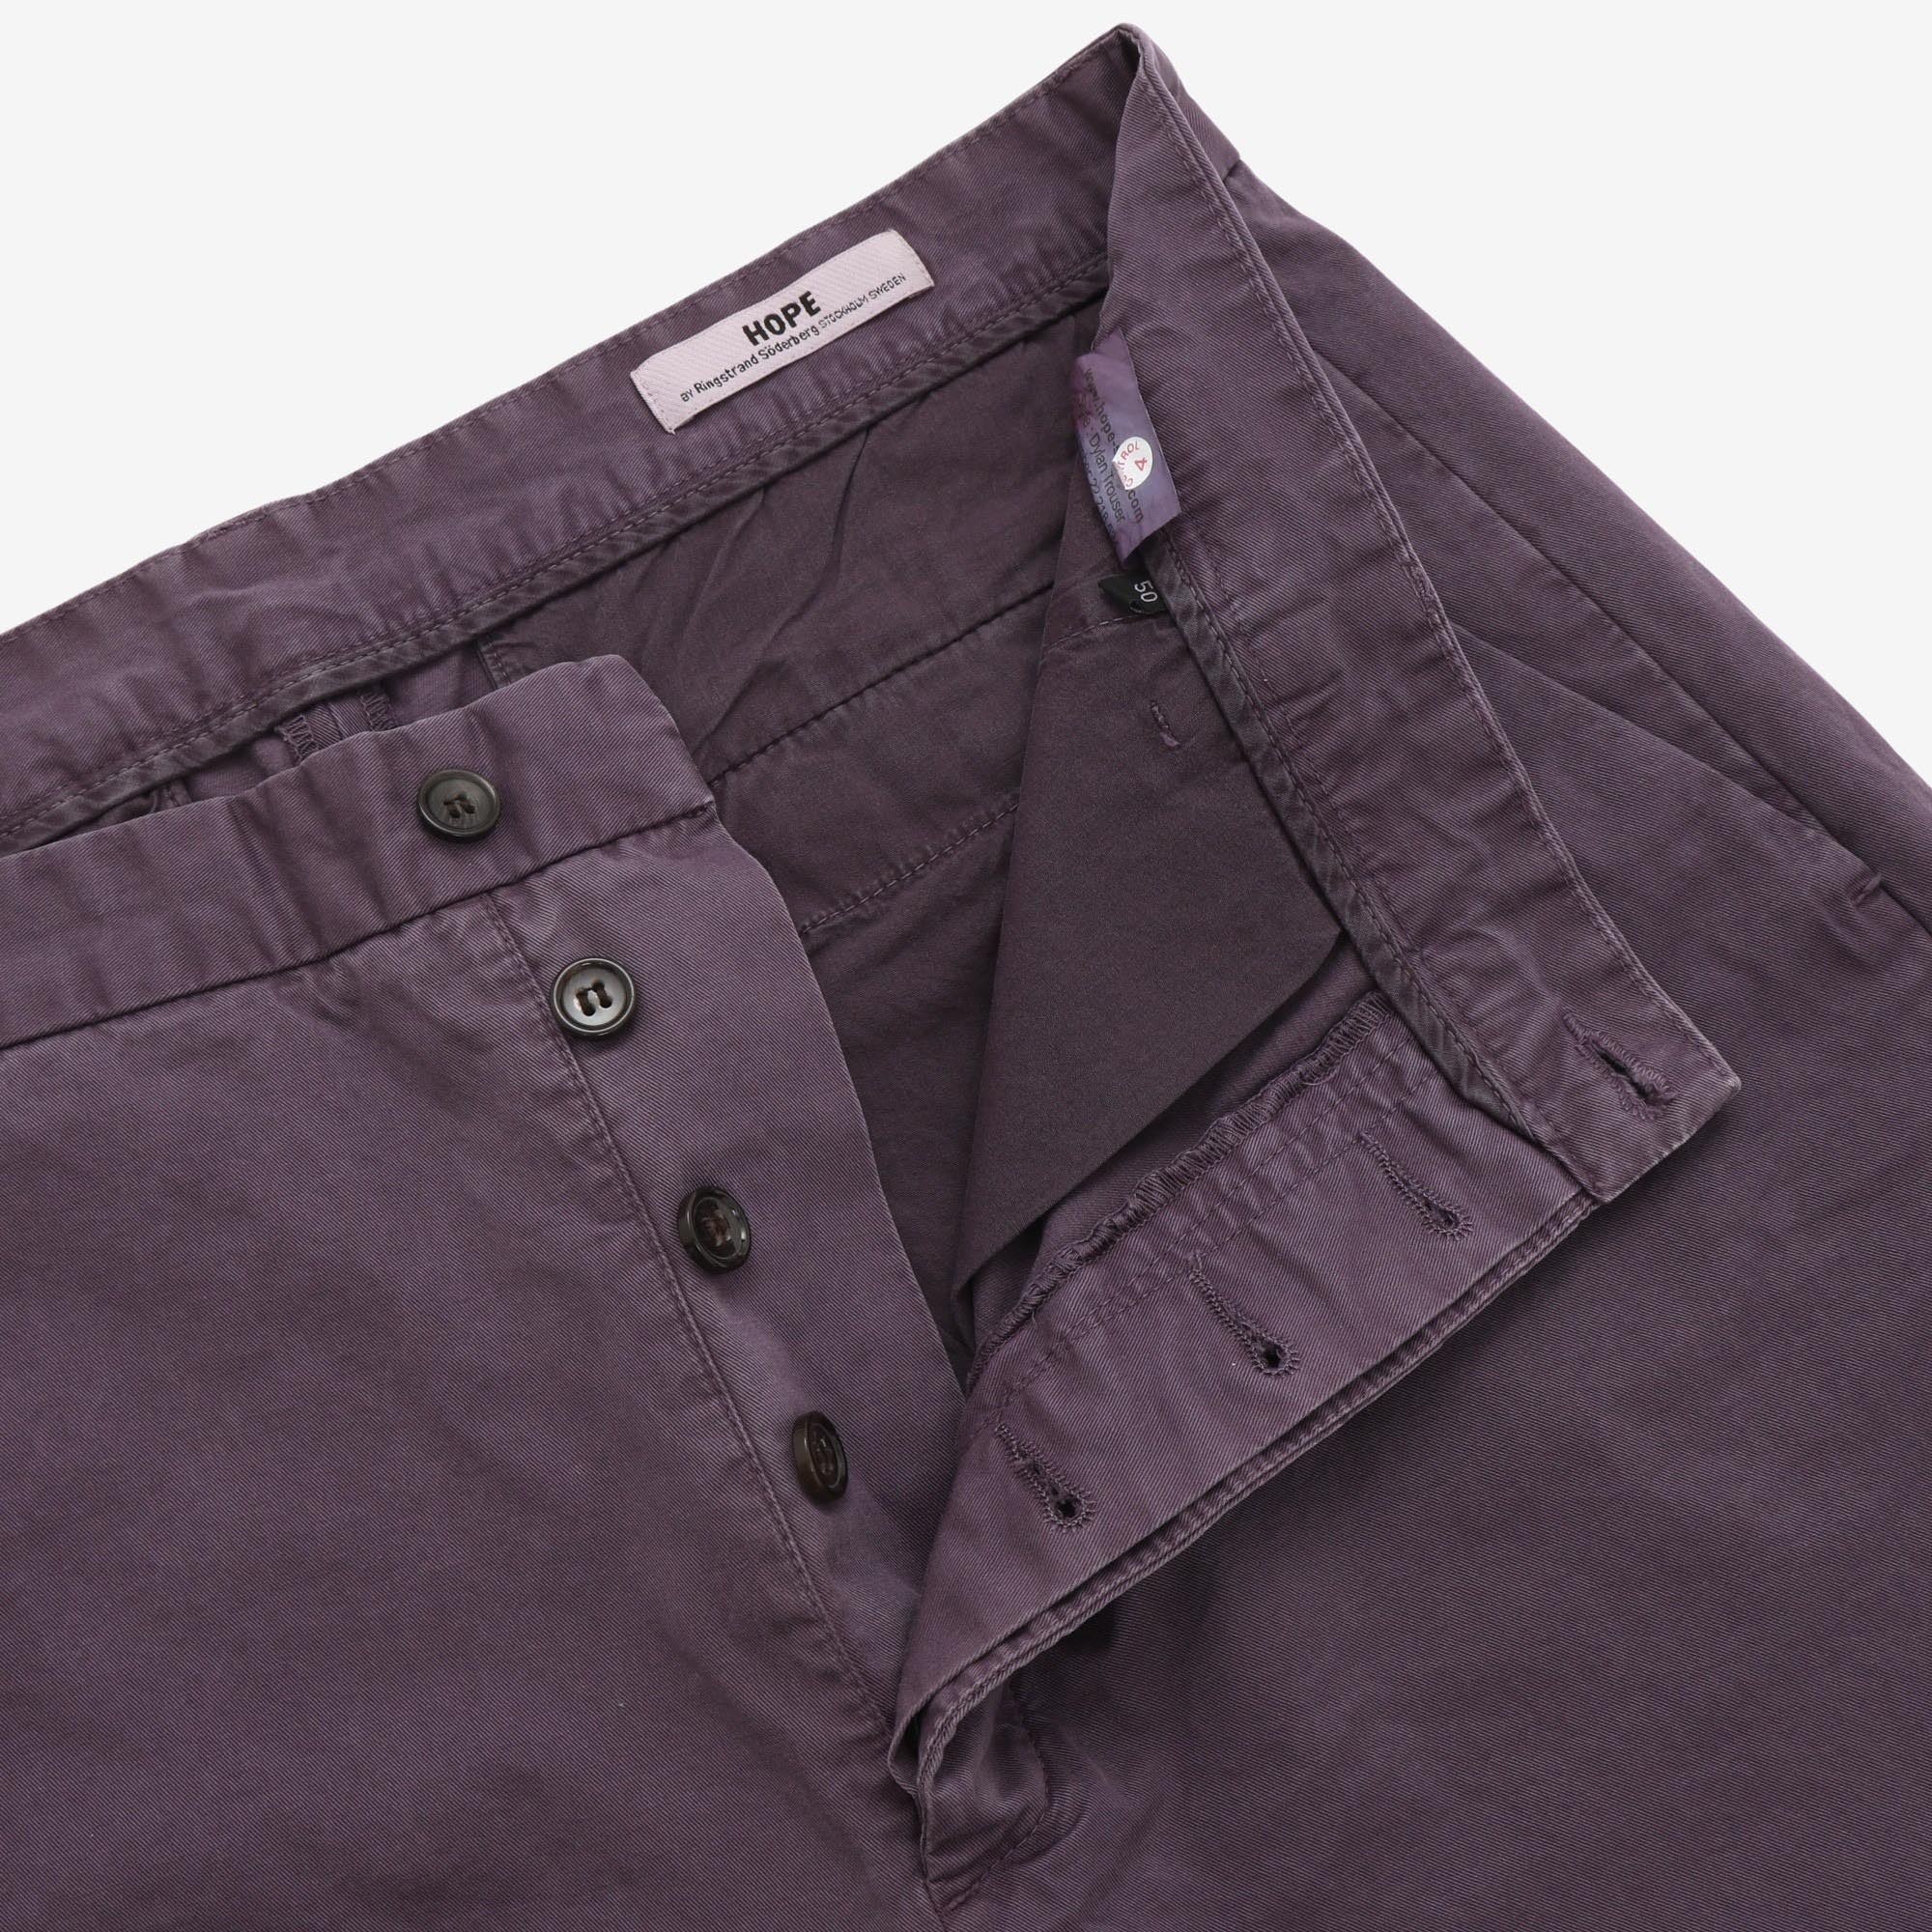 Chino Trousers (35W x 28L)